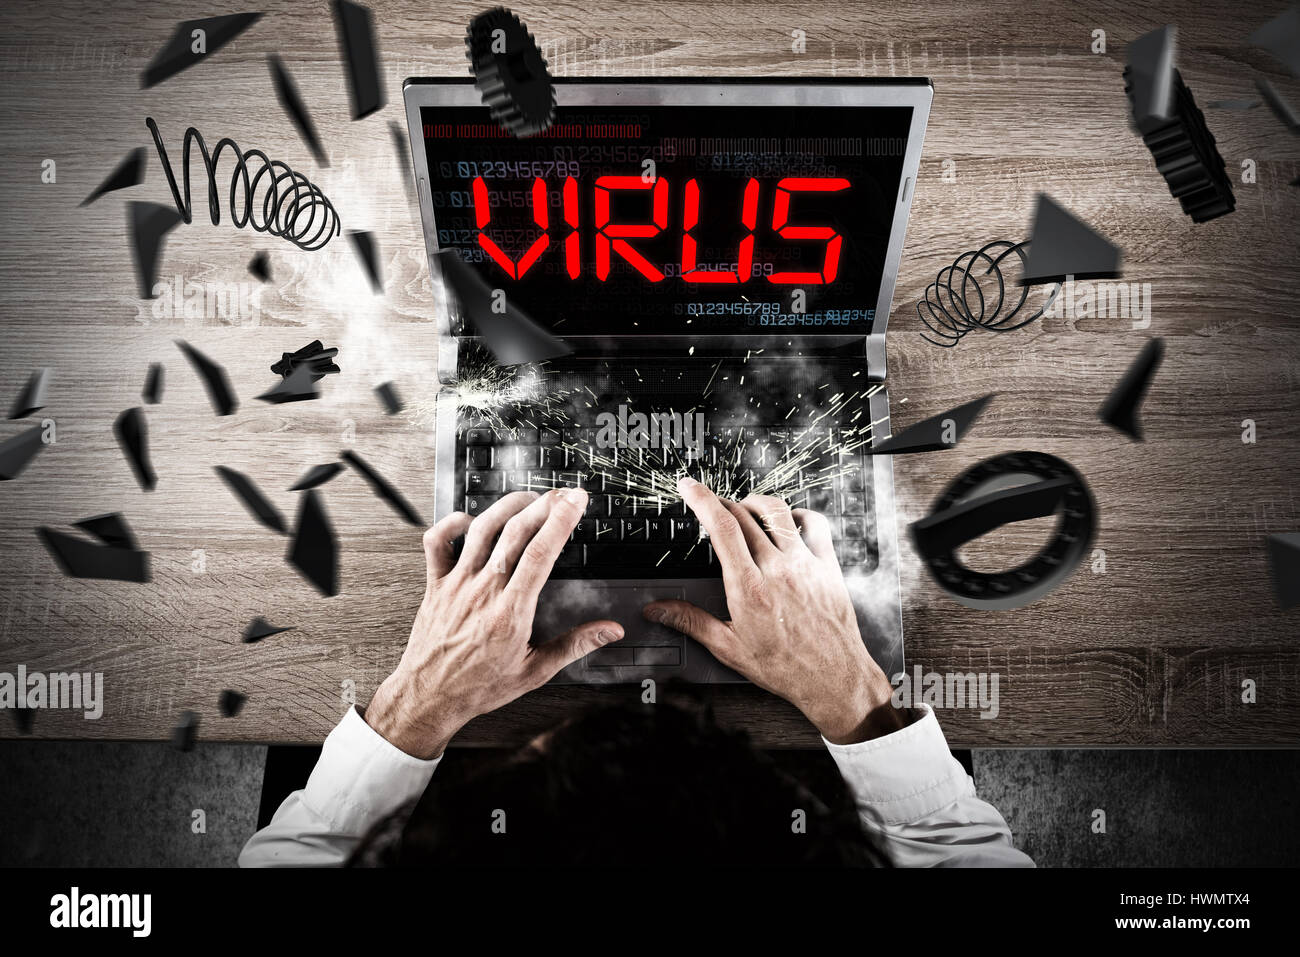 Virus on pc during work Stock Photo